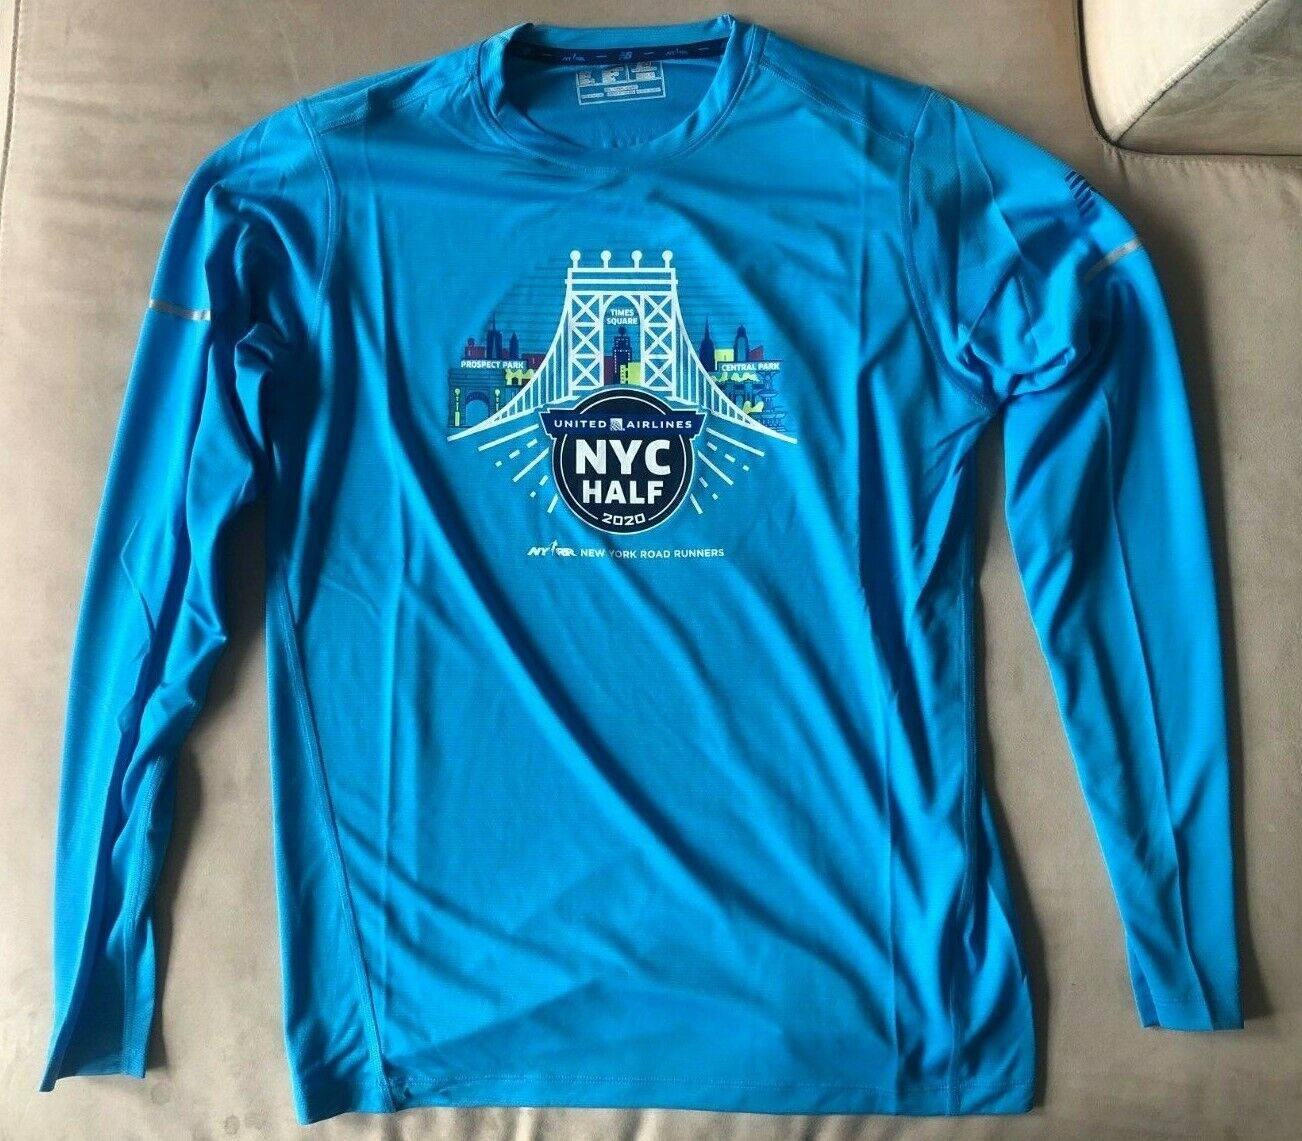 Nysgerrighed Uregelmæssigheder spion NYRR NYC Half Marathon 2020 Shirt Small NEW BALANCE United Airlines Womens  blue | eBay